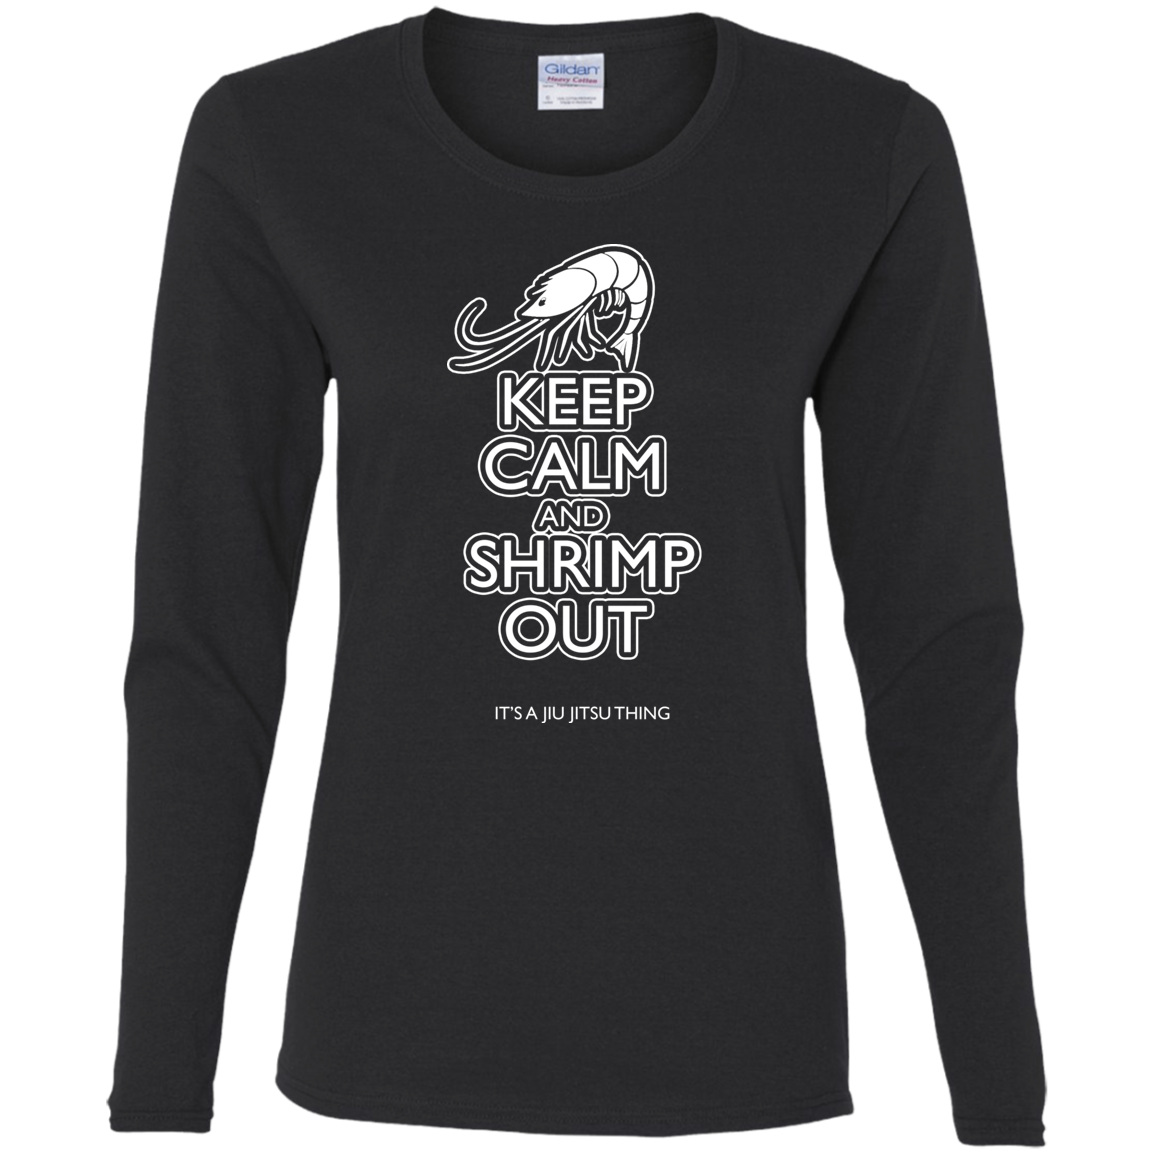 Artichoke Fight Gear Custom Design #12. Keep Calm and Shrimp Out. Ladies' 100% Pre-Shrunk Cotton Long Sleeve